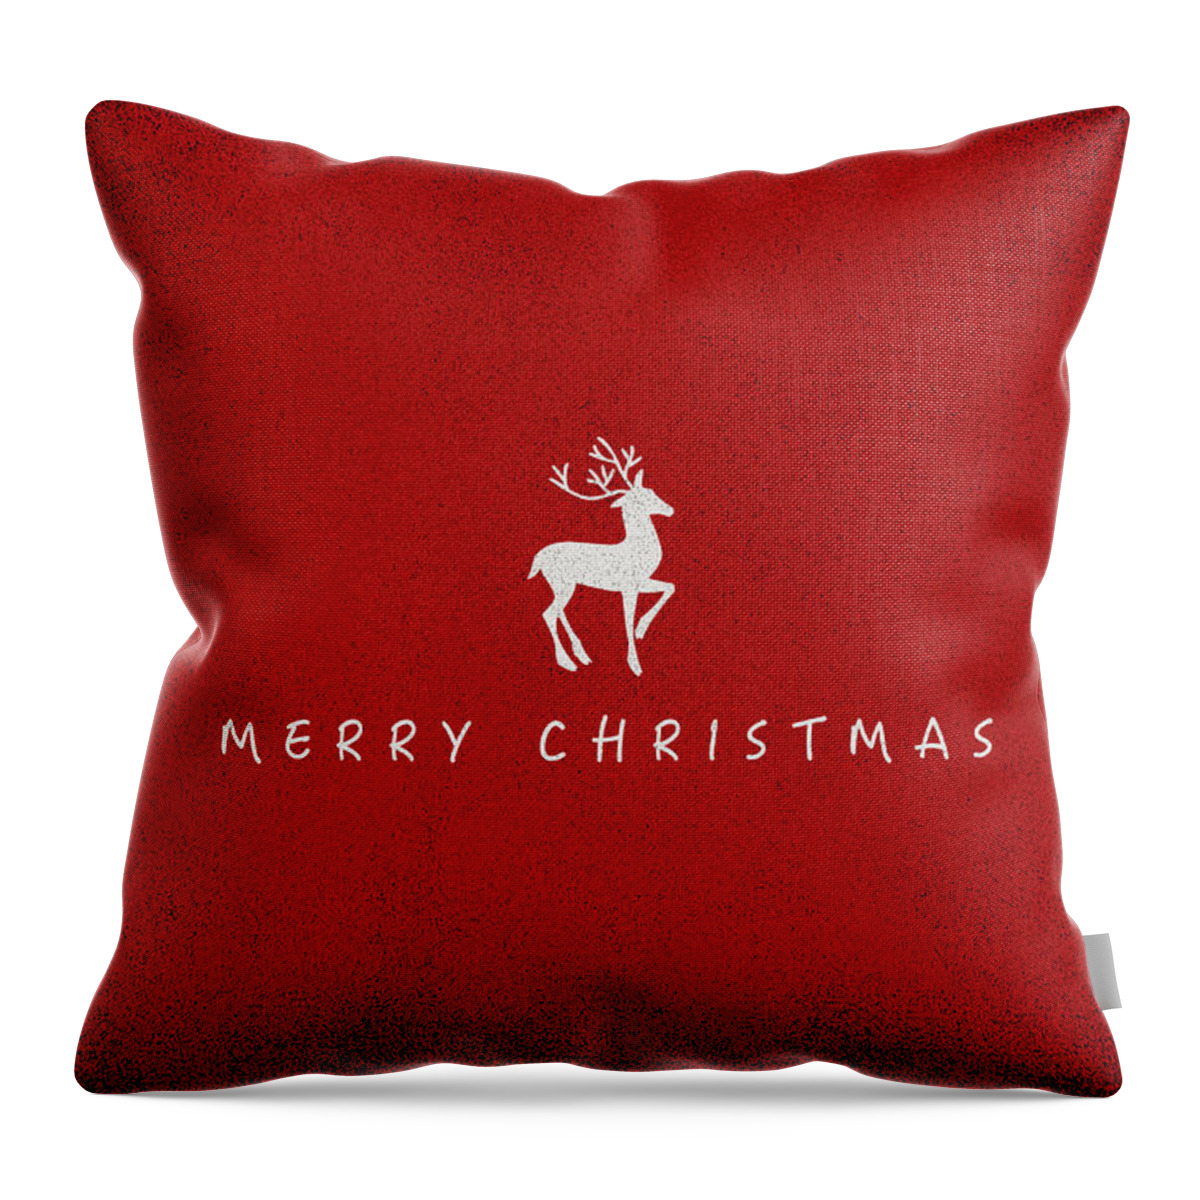 Christmas Throw Pillow featuring the digital art Christmas series Christmas Deer by Kathleen Wong